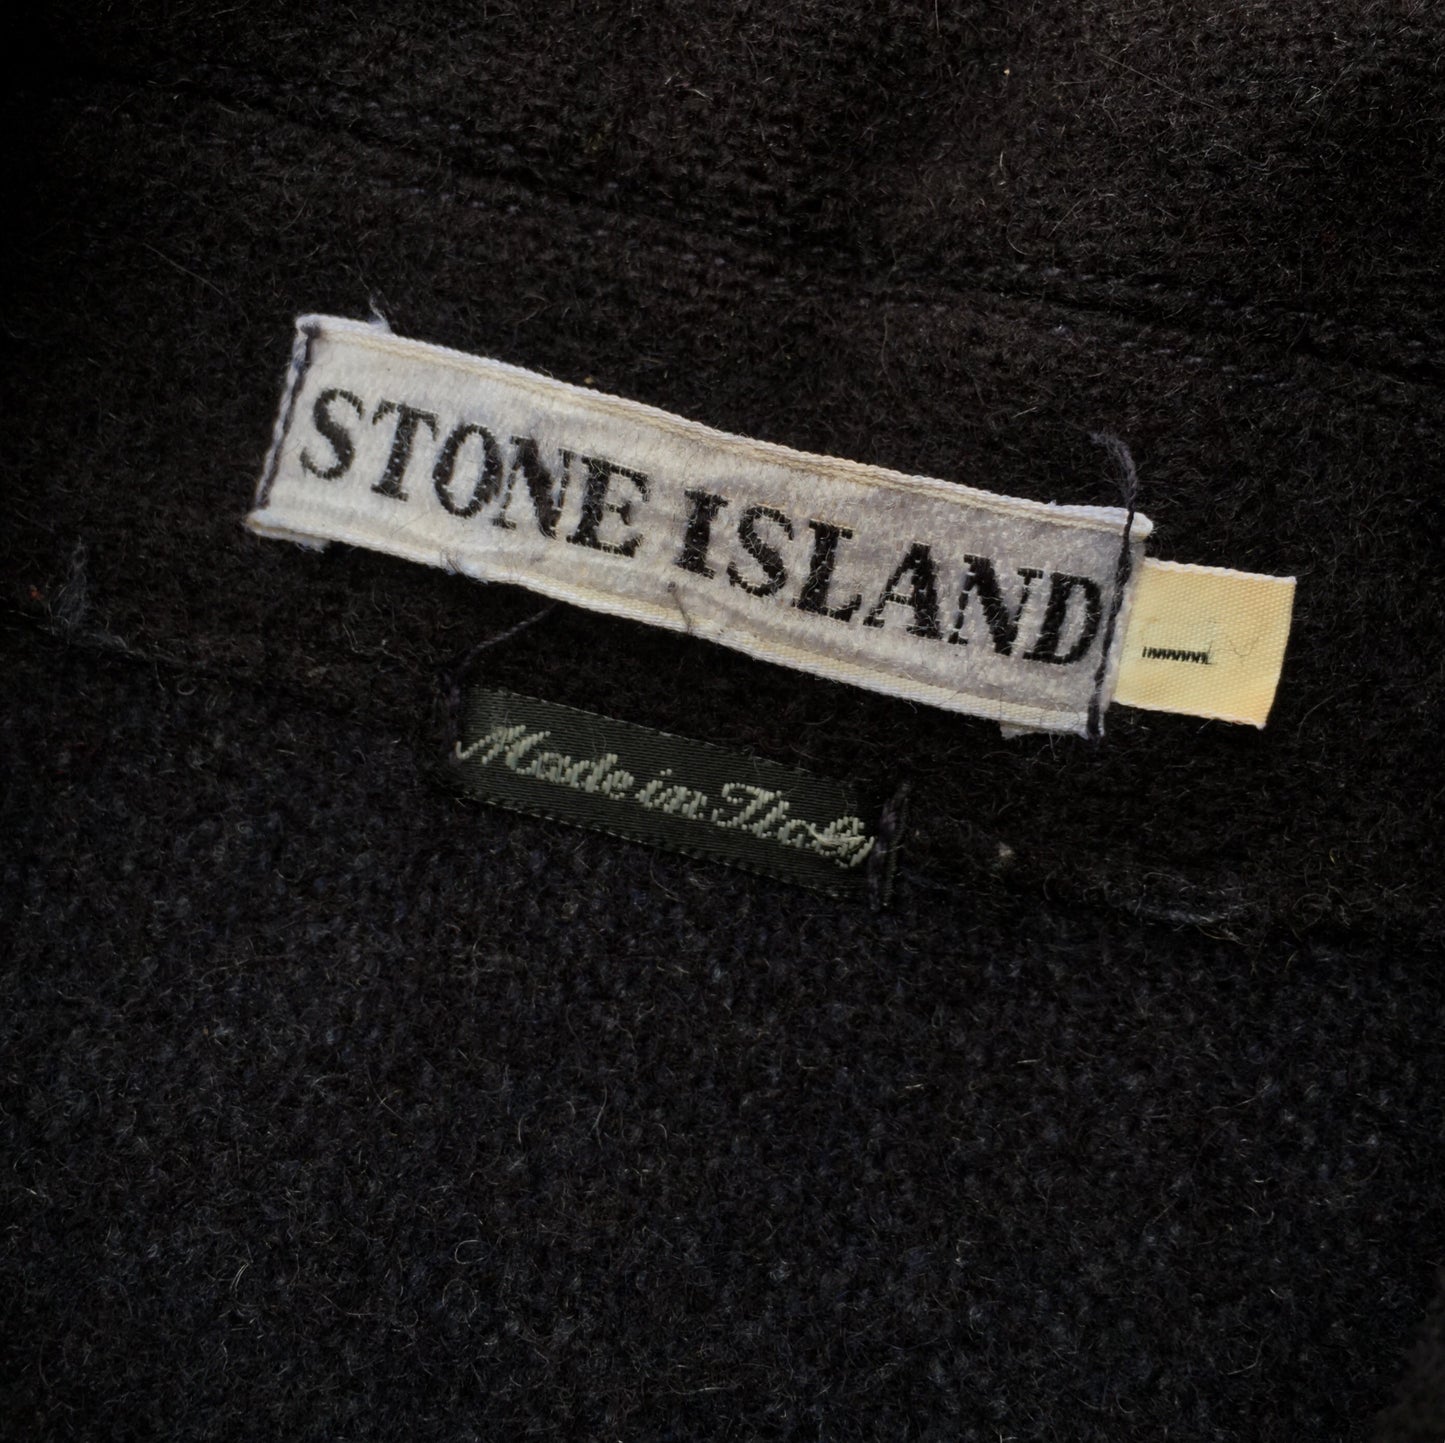 Stone Island AW 1995 Wool Pea Coat - L/XL